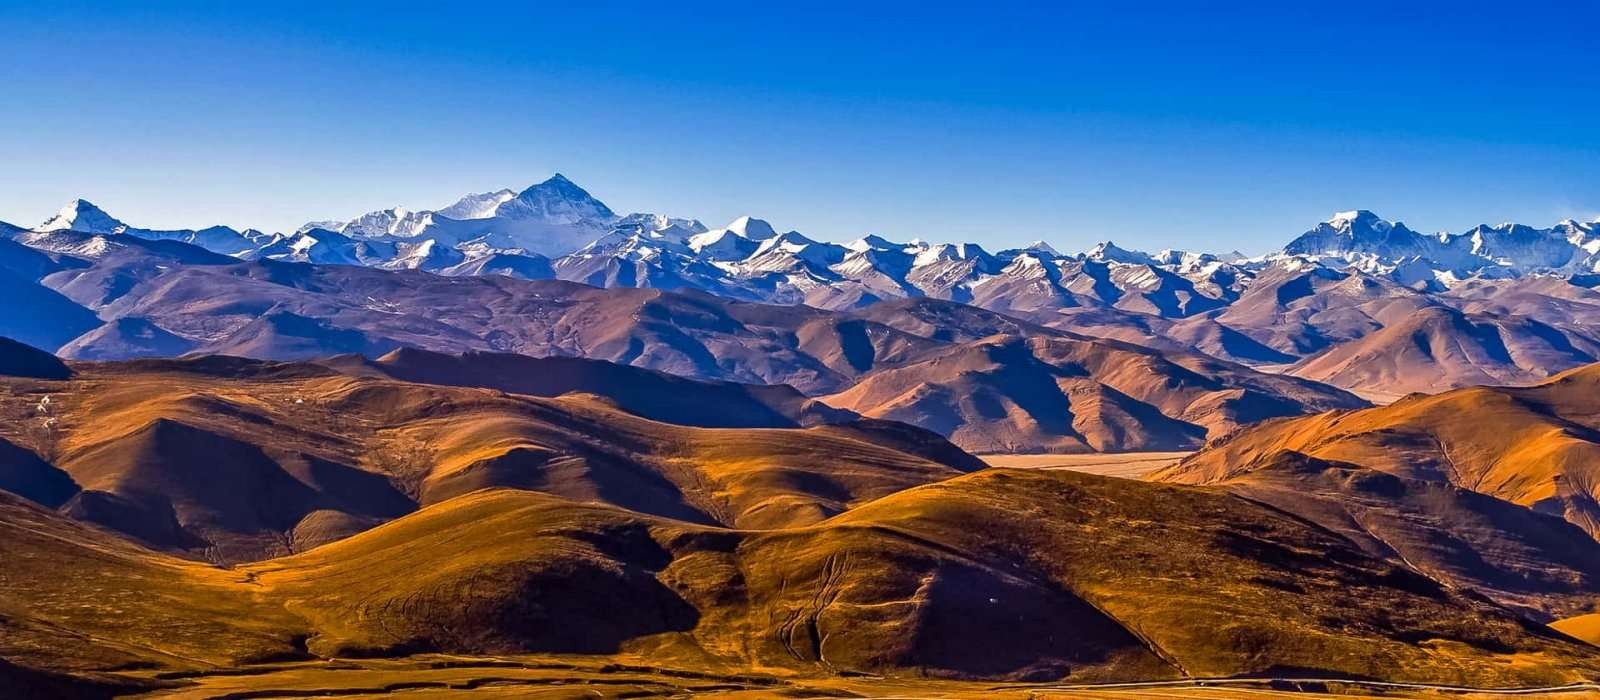 Lhasa Everest Base Camp Tour